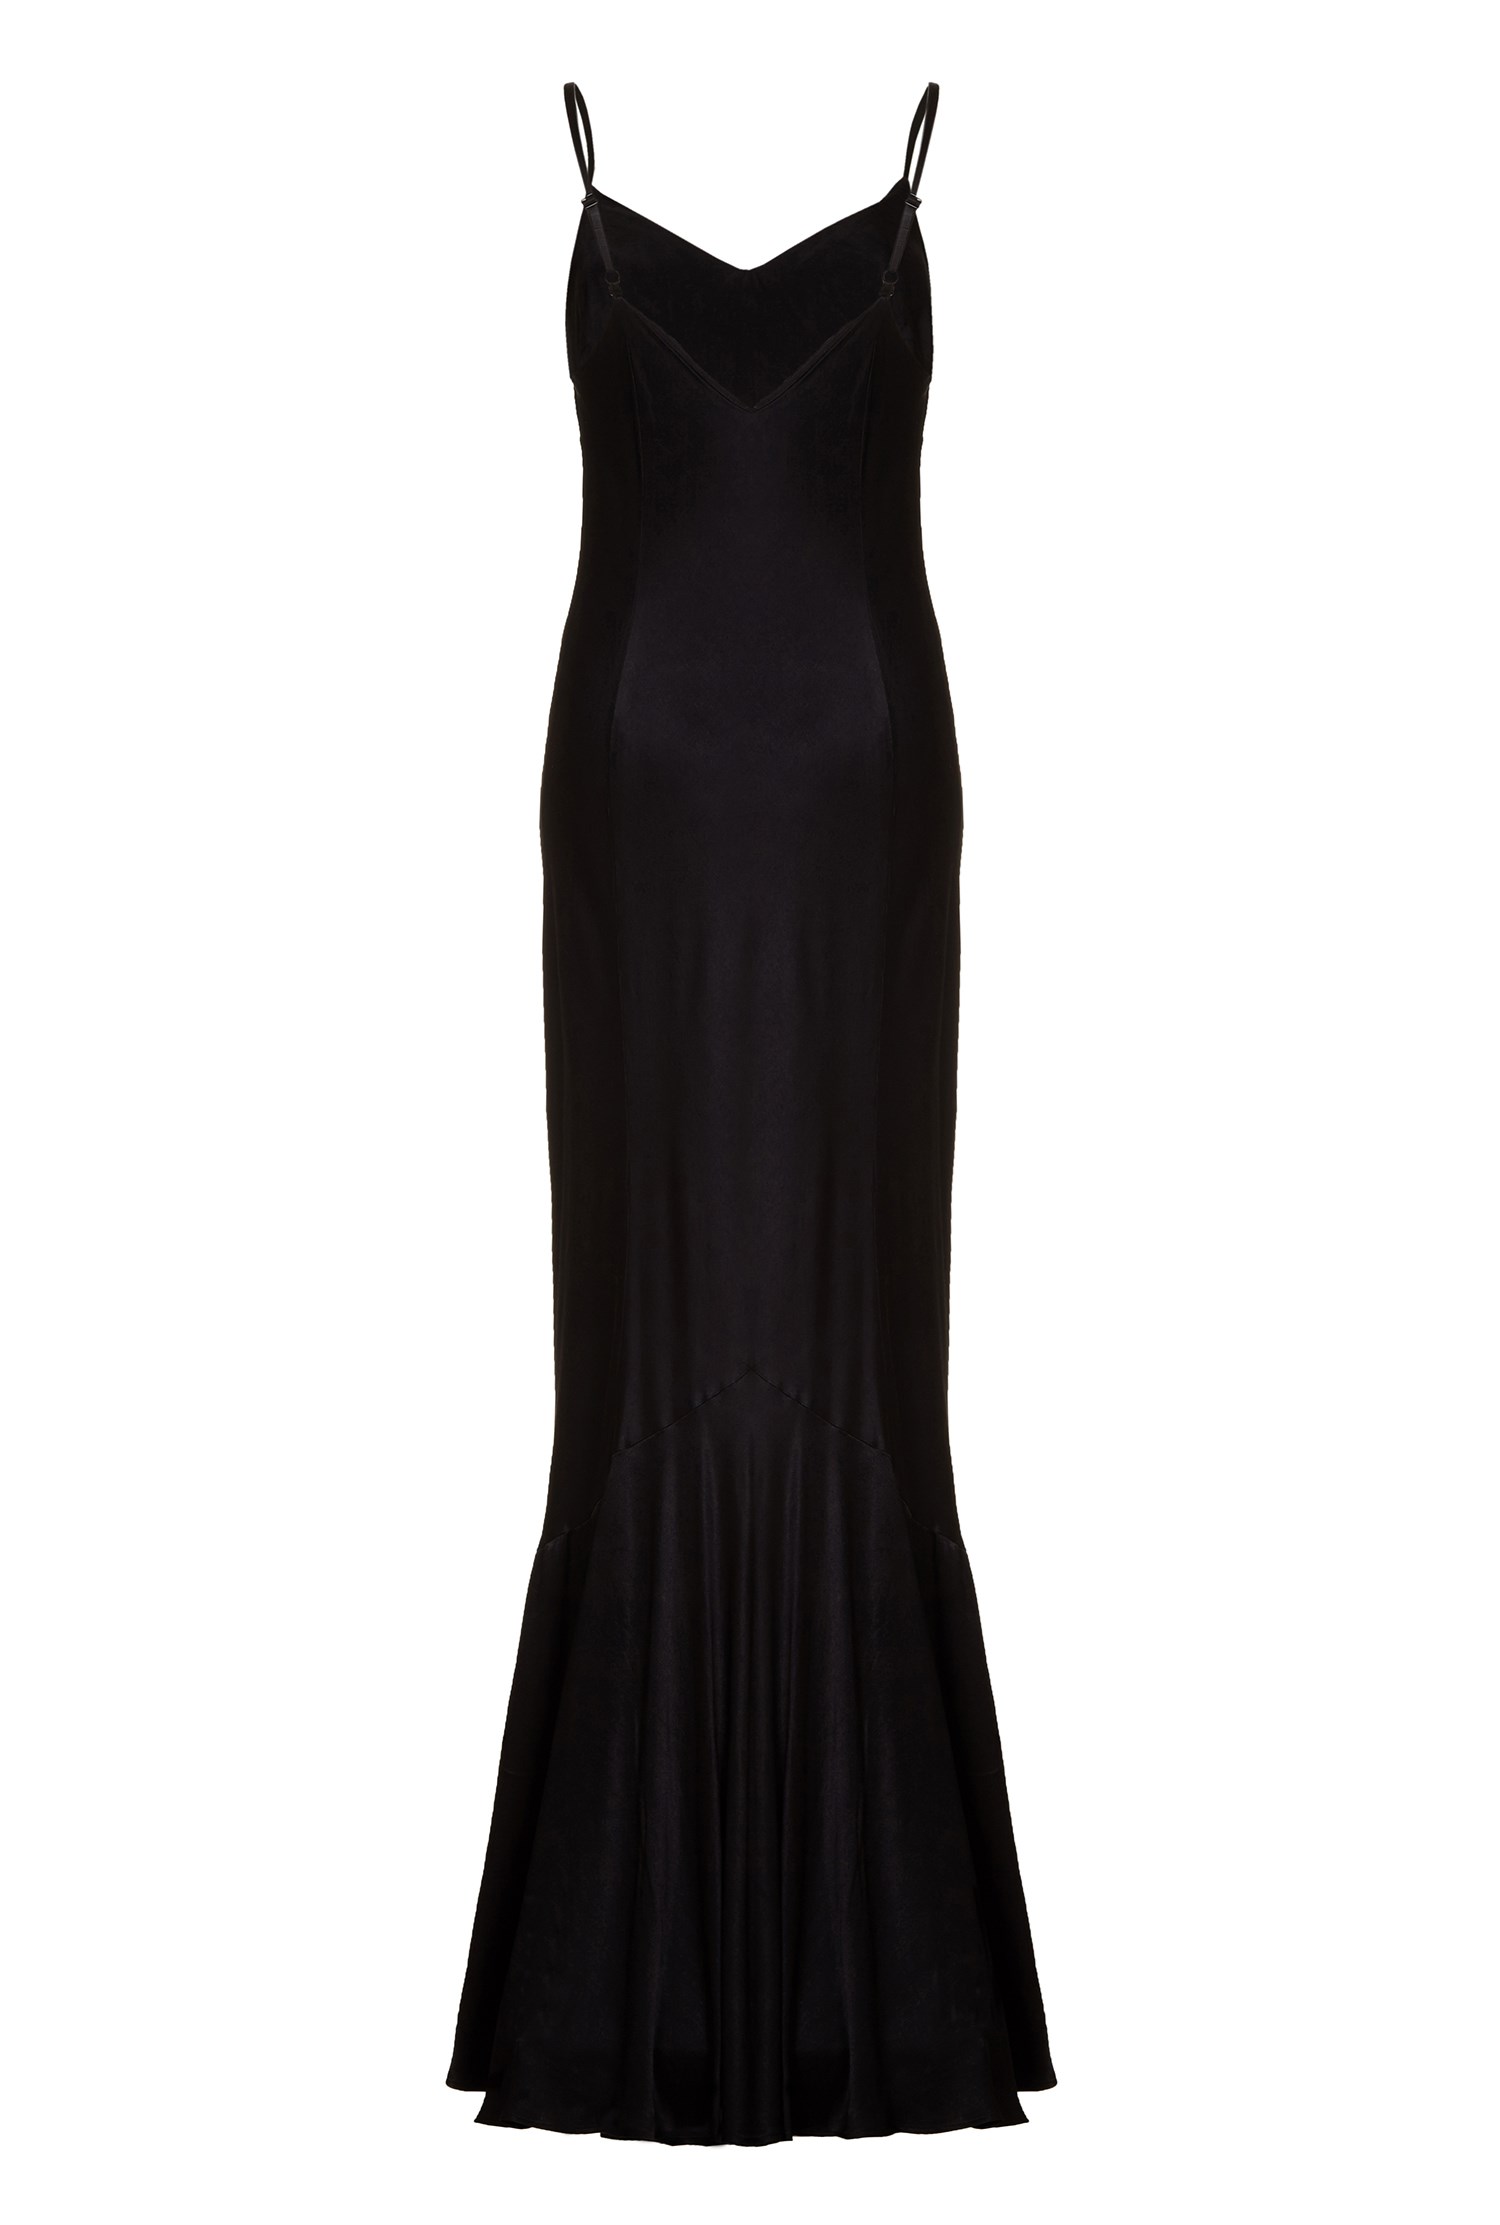 Bella Dress Black | Ghost.co.uk